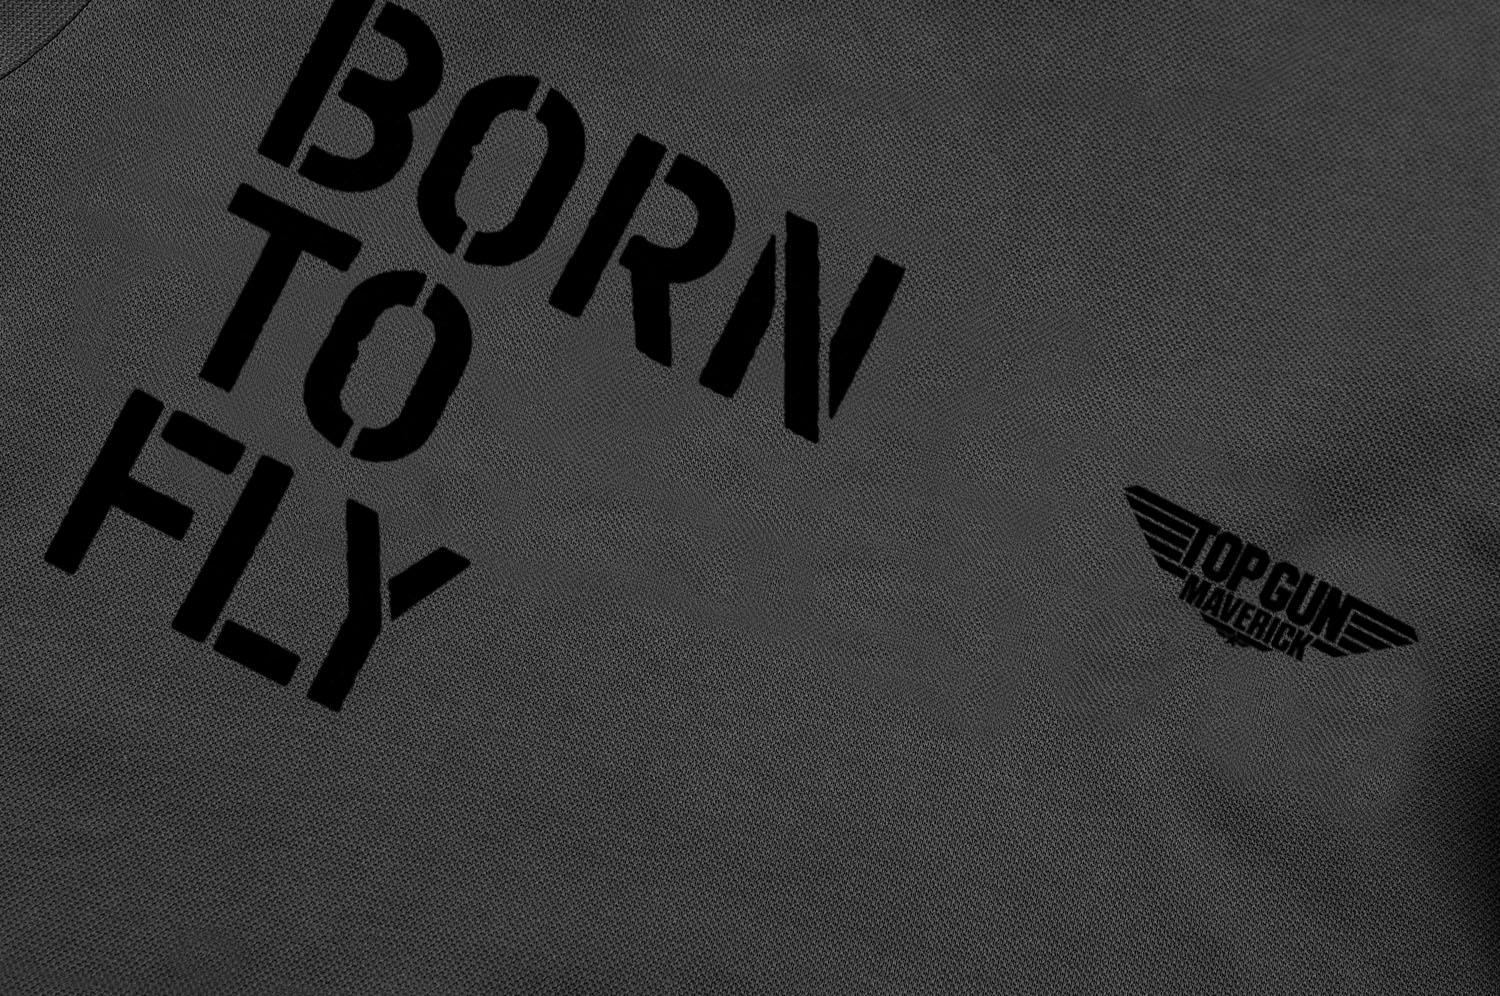 Top Gun: Maverick - Born To Fly - Men's Short Sleeve Graphic T